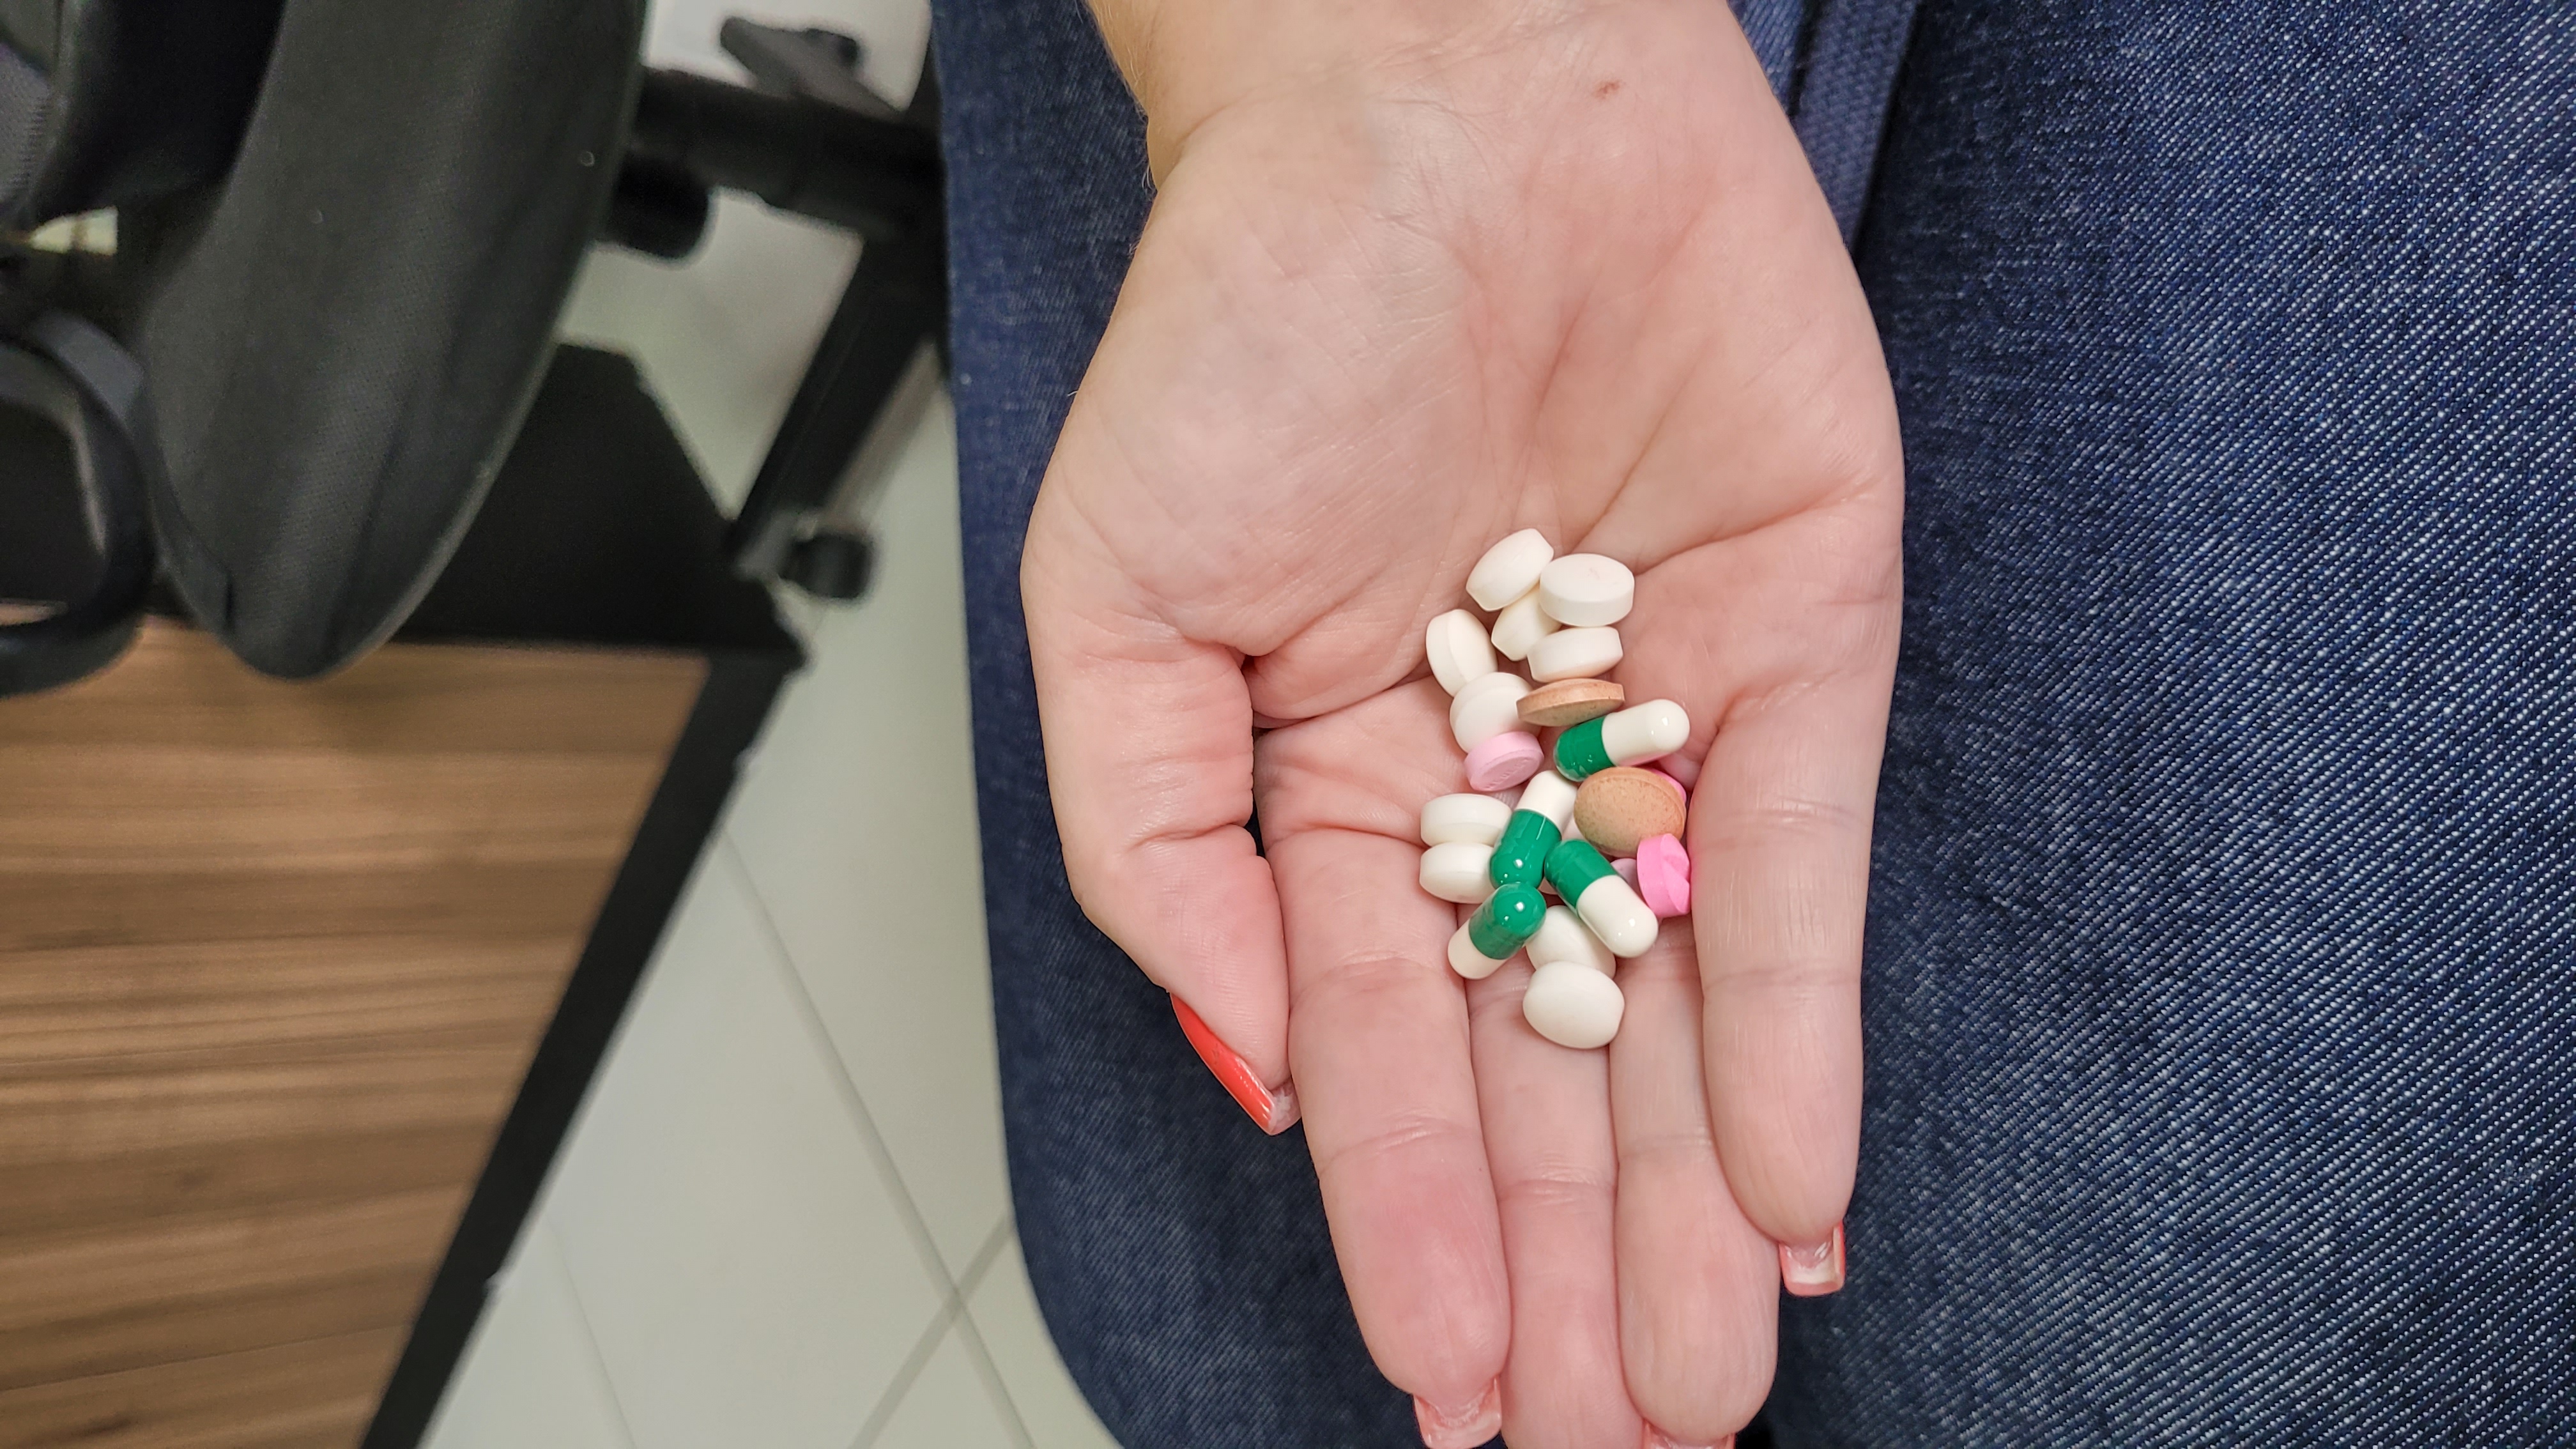 Consumo de antidepressivos tem alta expressiva no RN - Foto: Juliana Manzano/NOVO